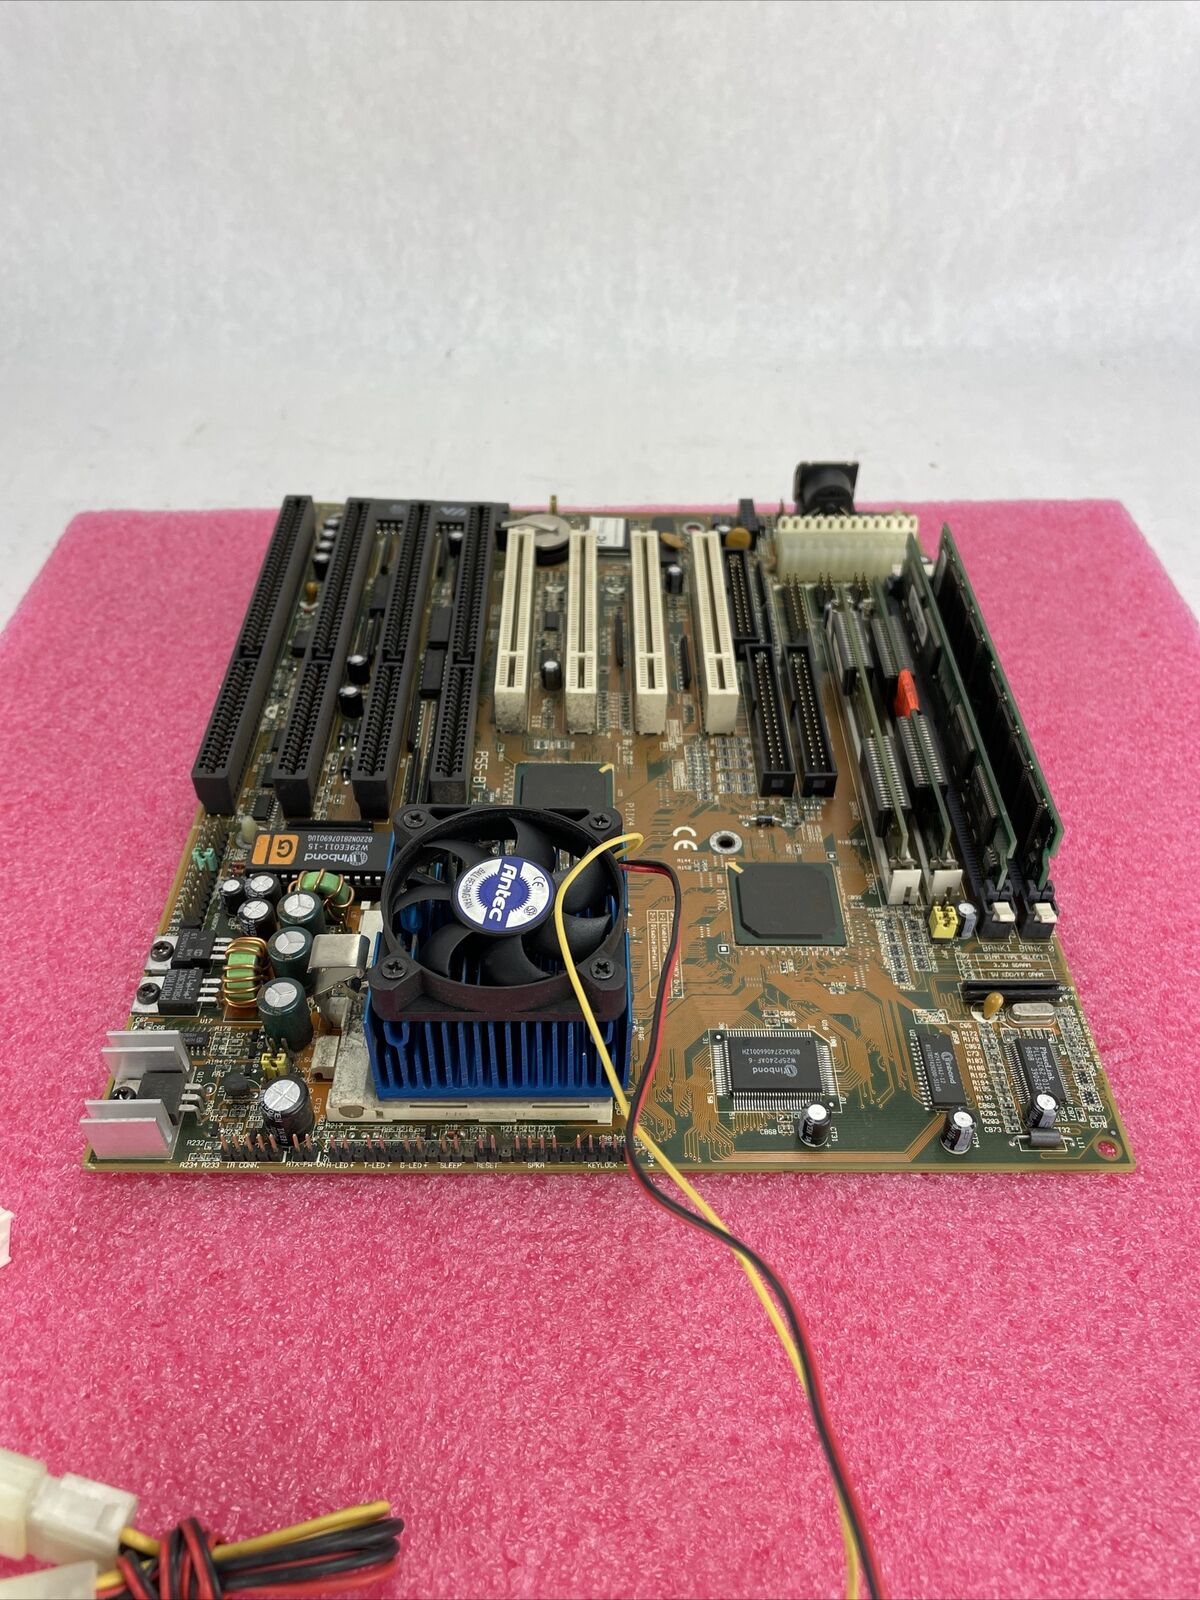 ASUS P55-BT AT Motherboard Cyrix 6x86 MX 166MHz 48MB RAM